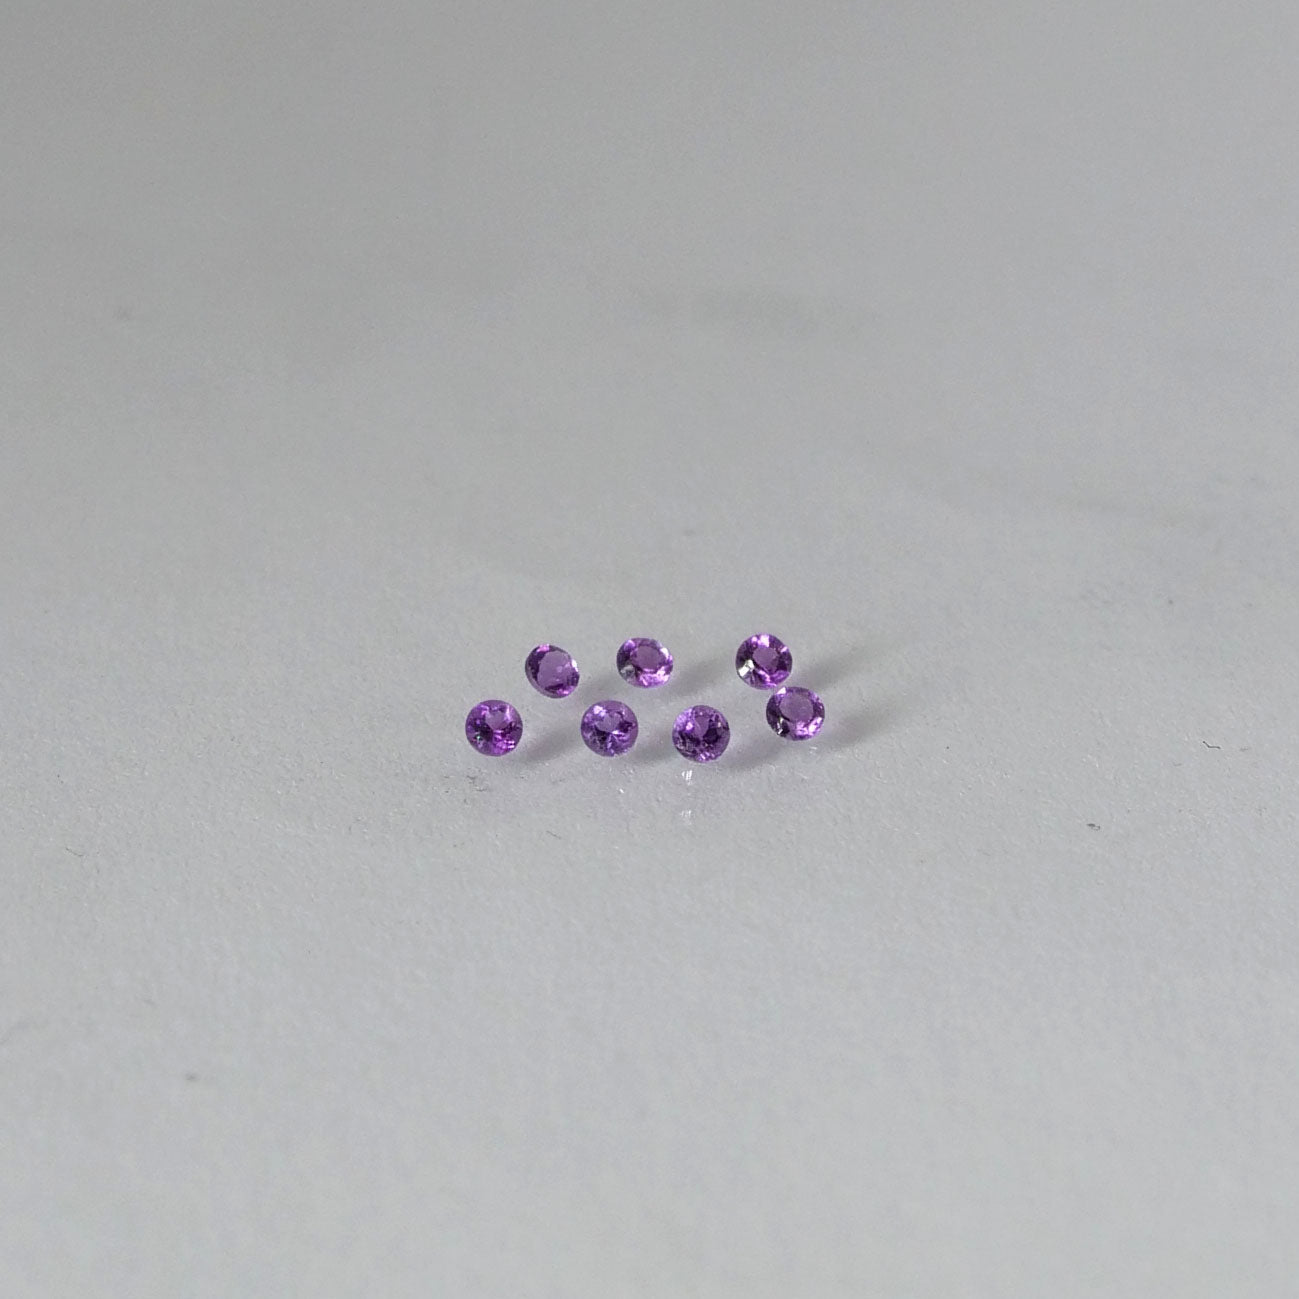 Amethyst | round cut, lavender, purple, accent stones, VS clarity, Africa - Eden Garden Jewelry™